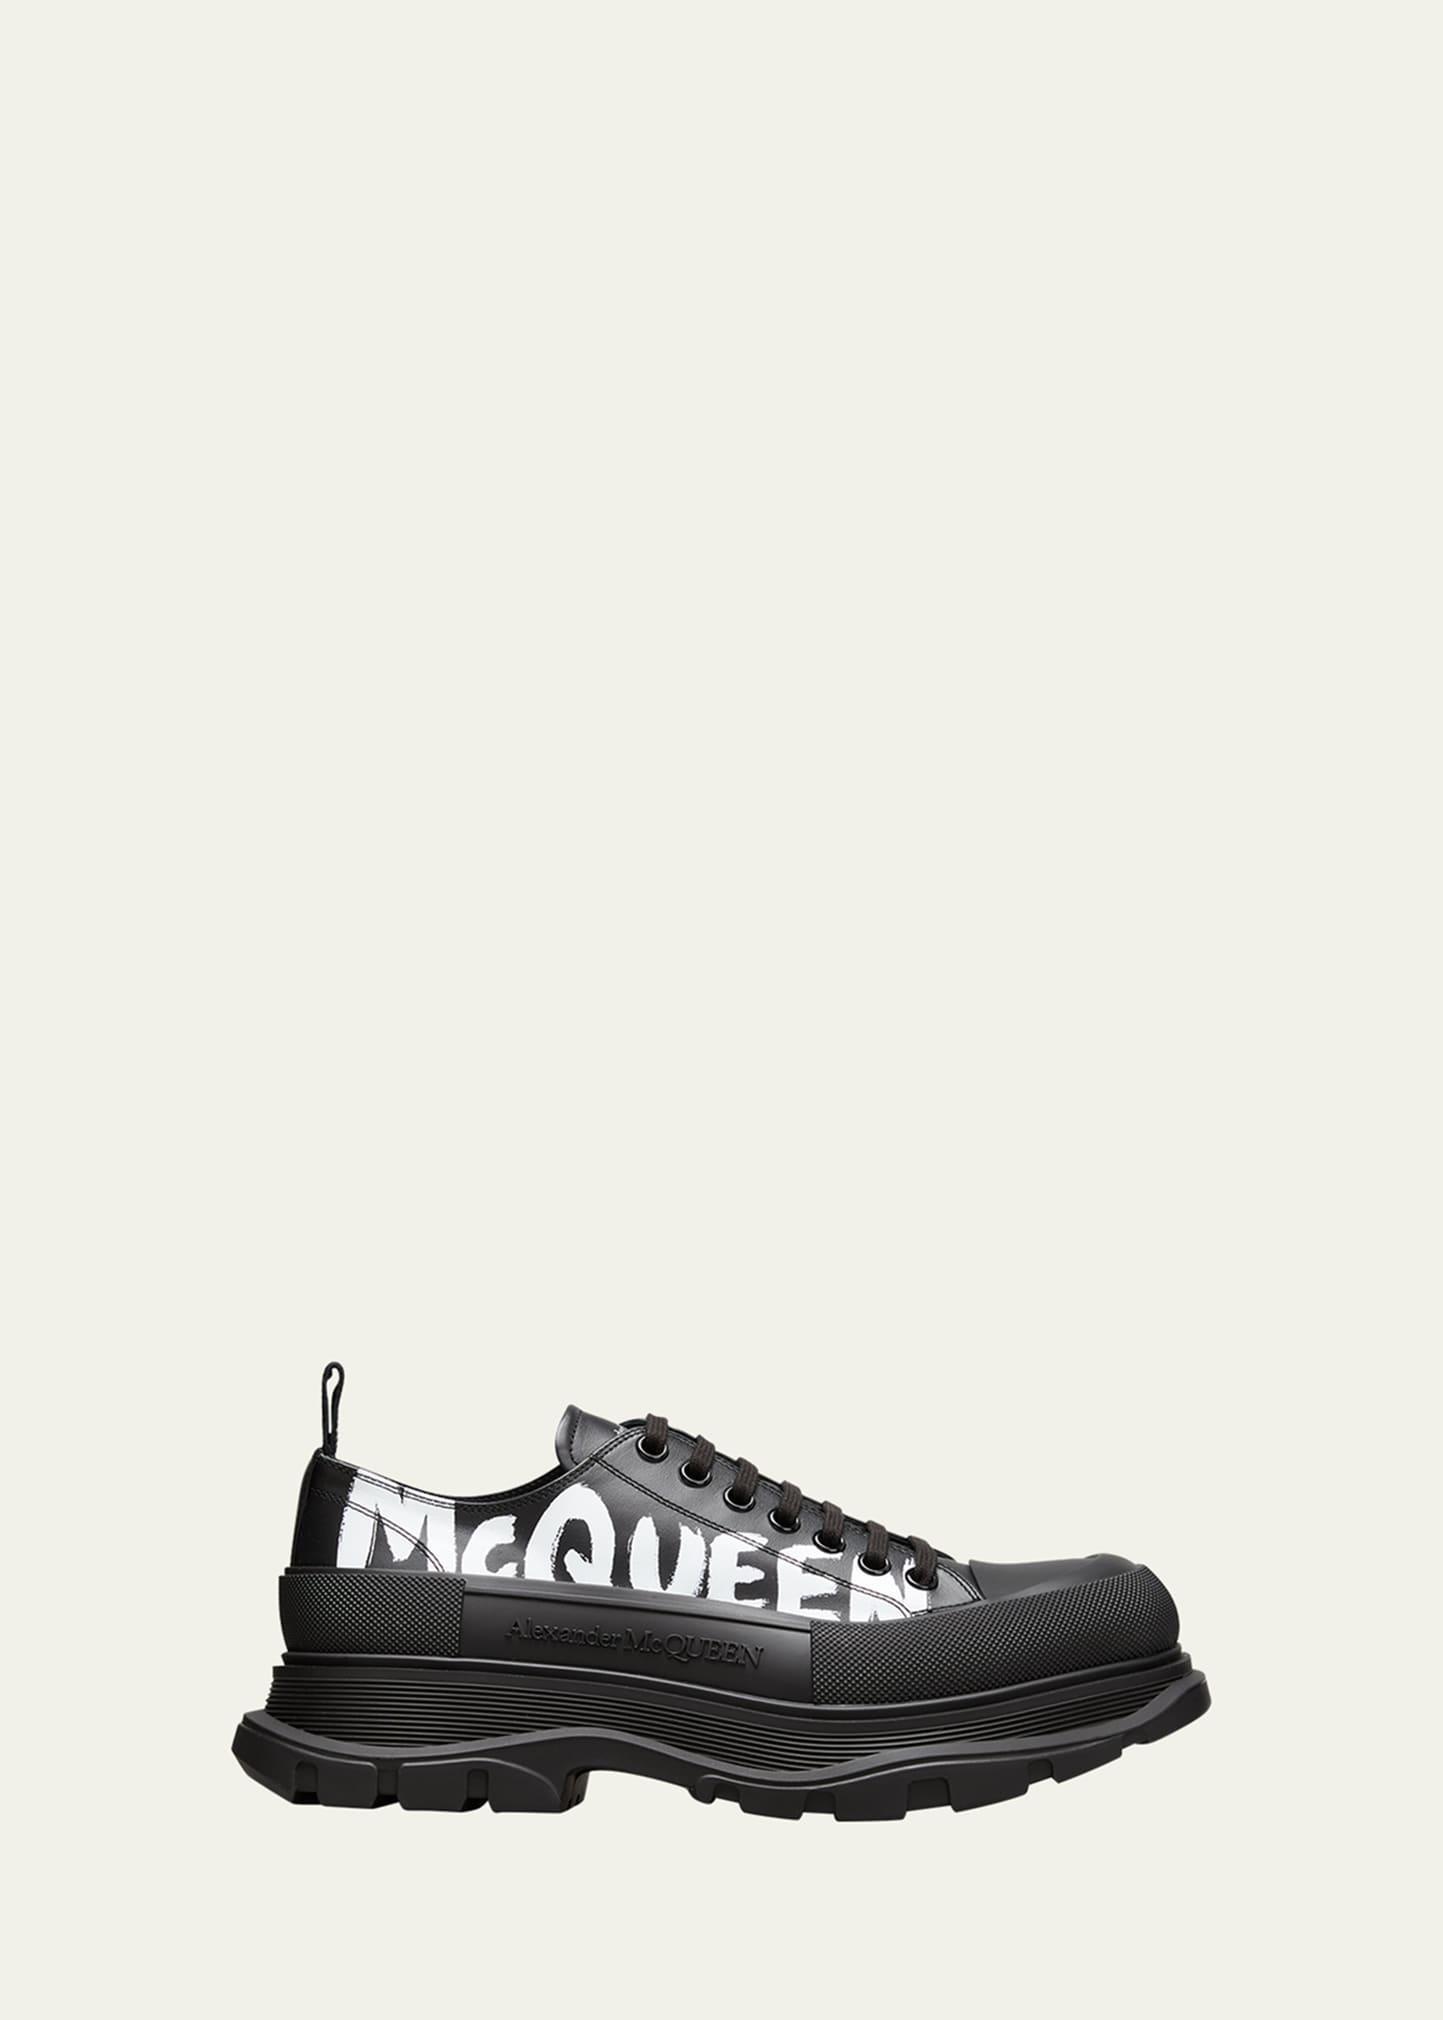 Alexander McQueen Tread Slick Graffiti Low Top Sneaker Product Image